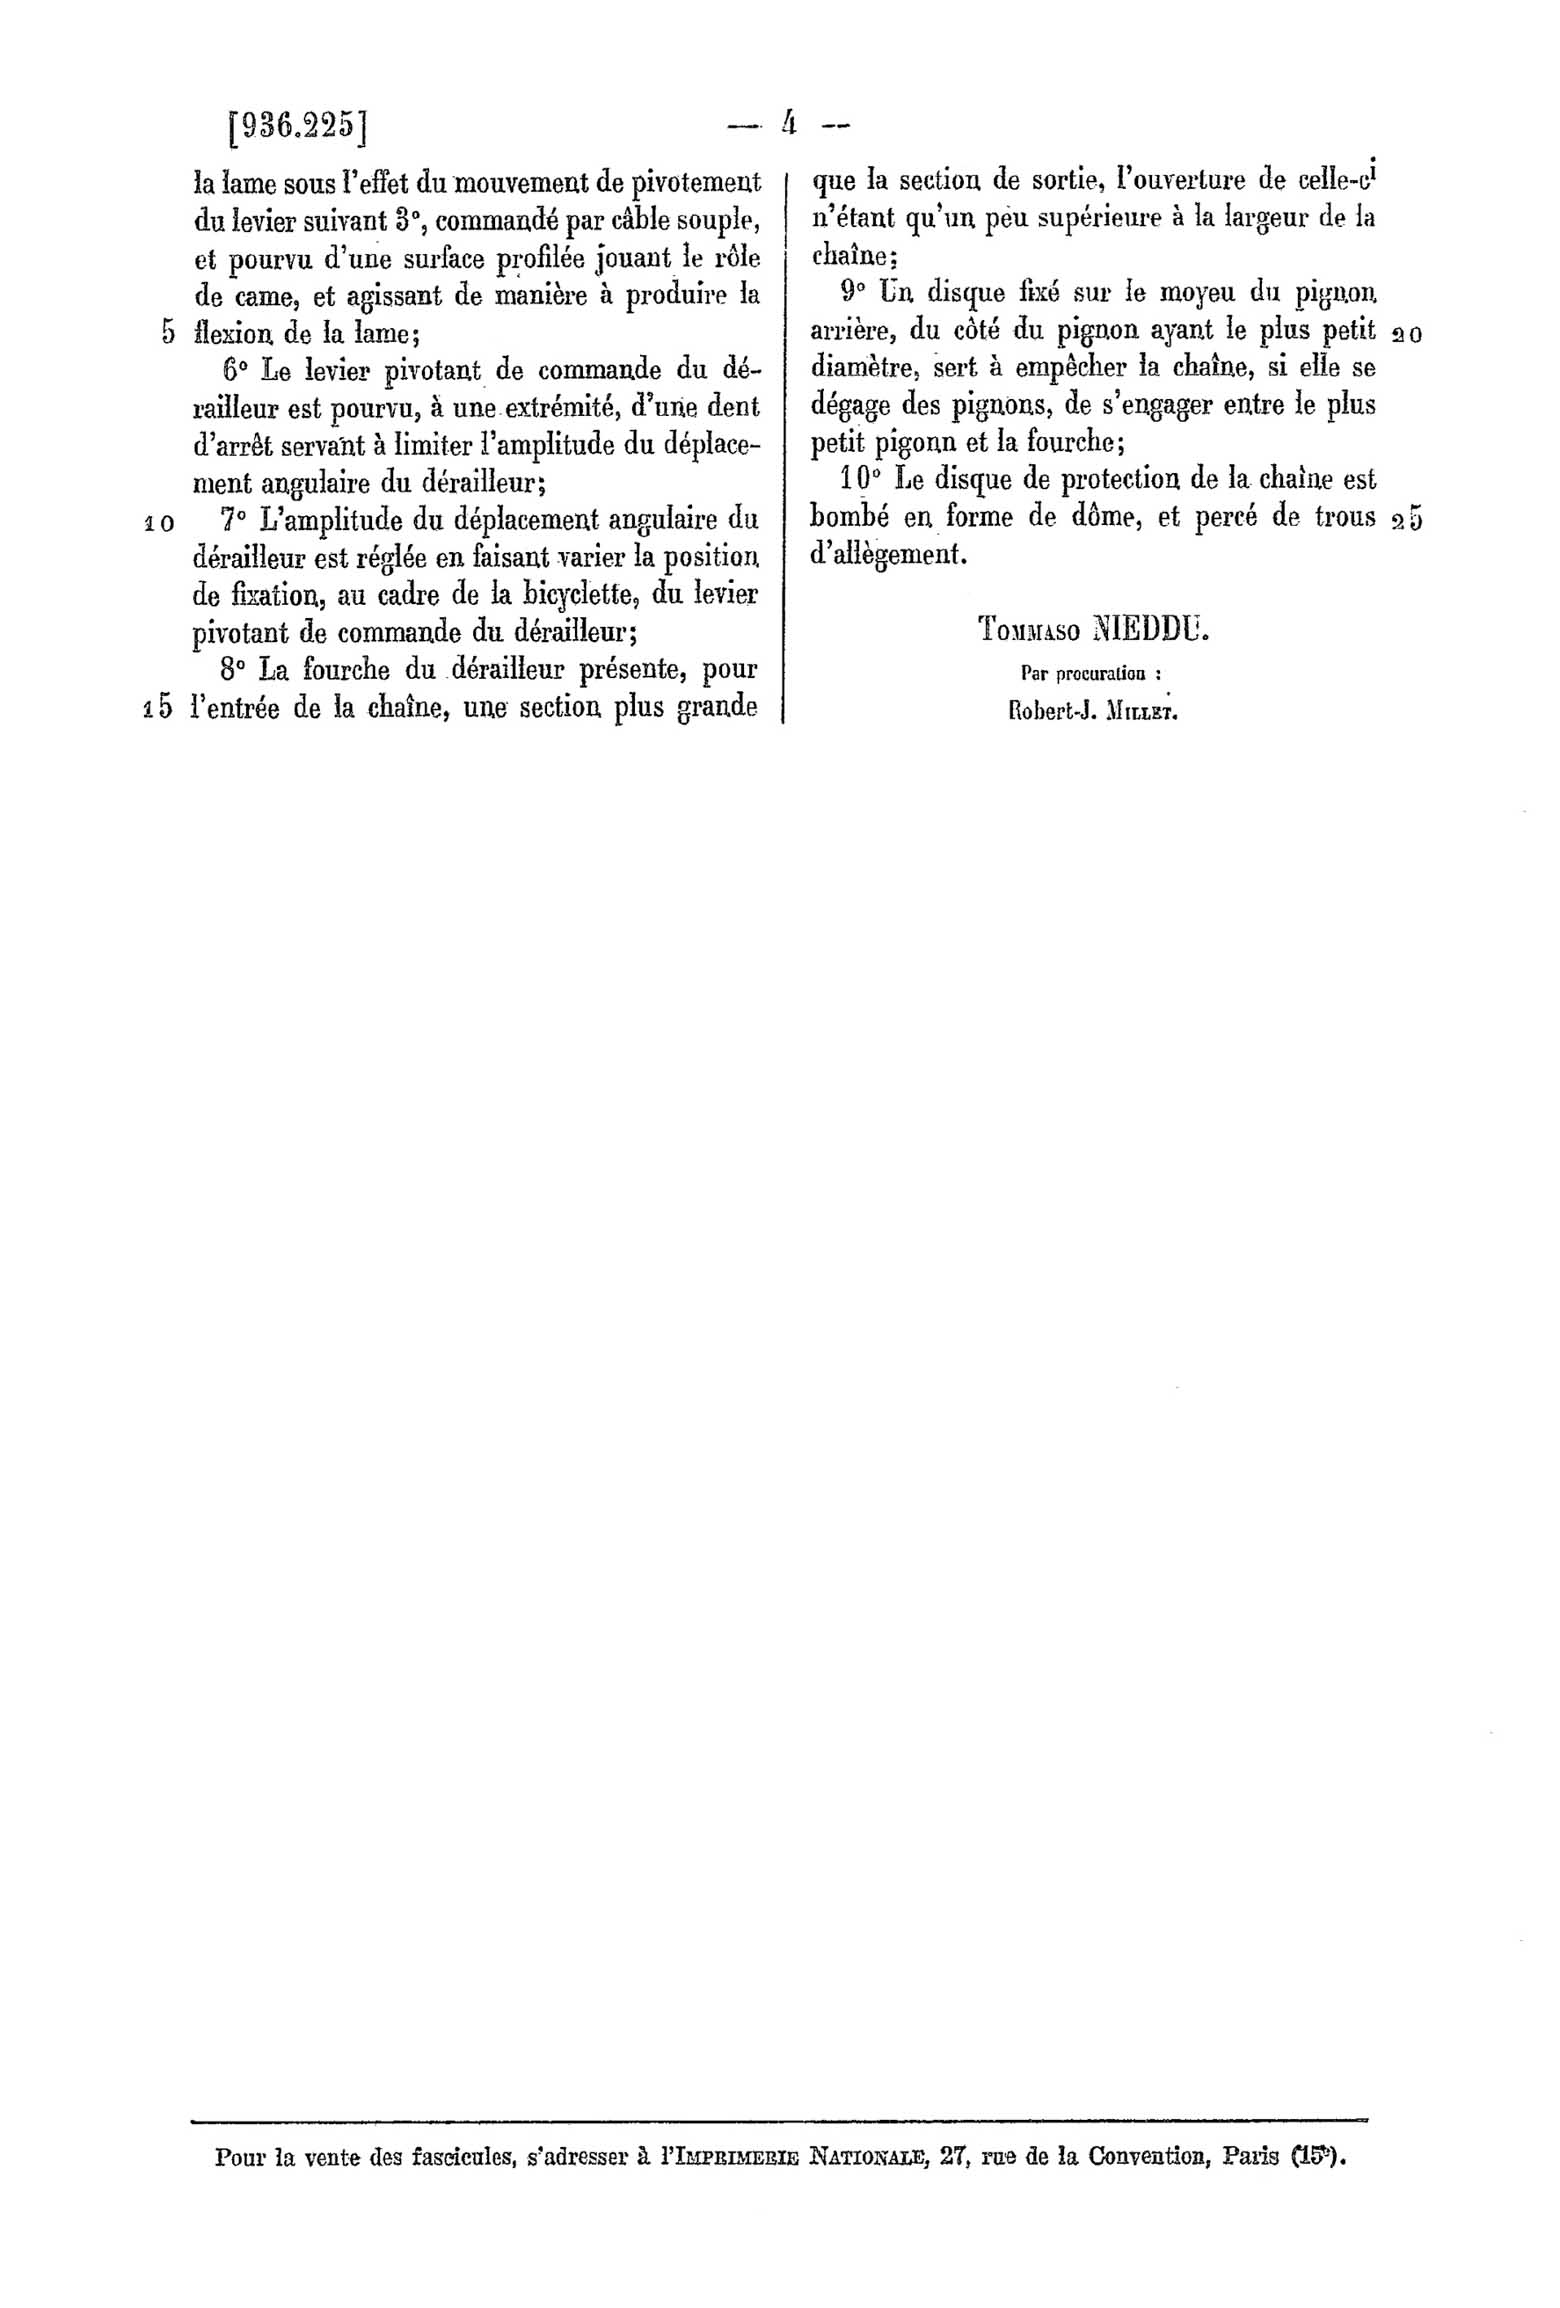 French Patent 936,225 - Vittoria scan 4 main image